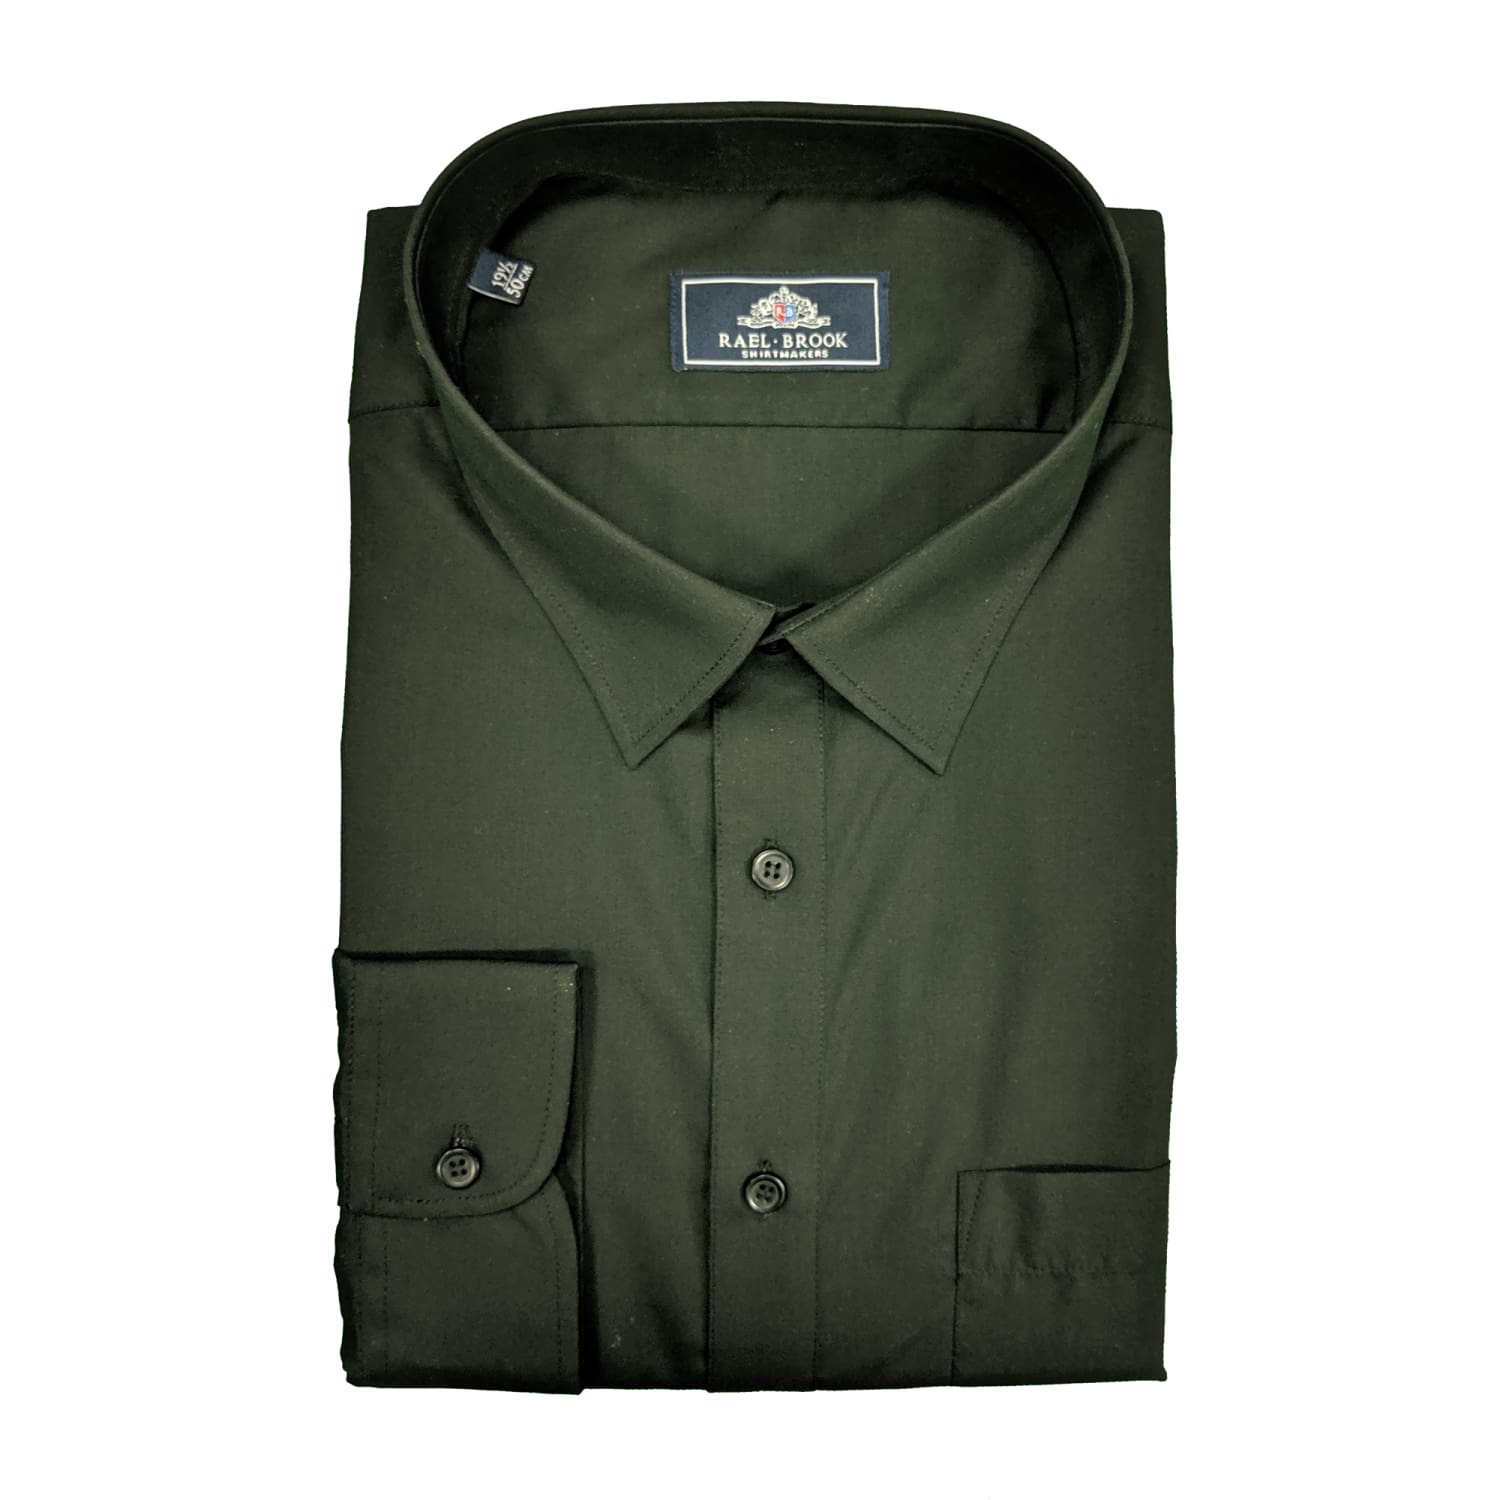 Rael Brook Plain L/S Shirt - 8032 - Black 1